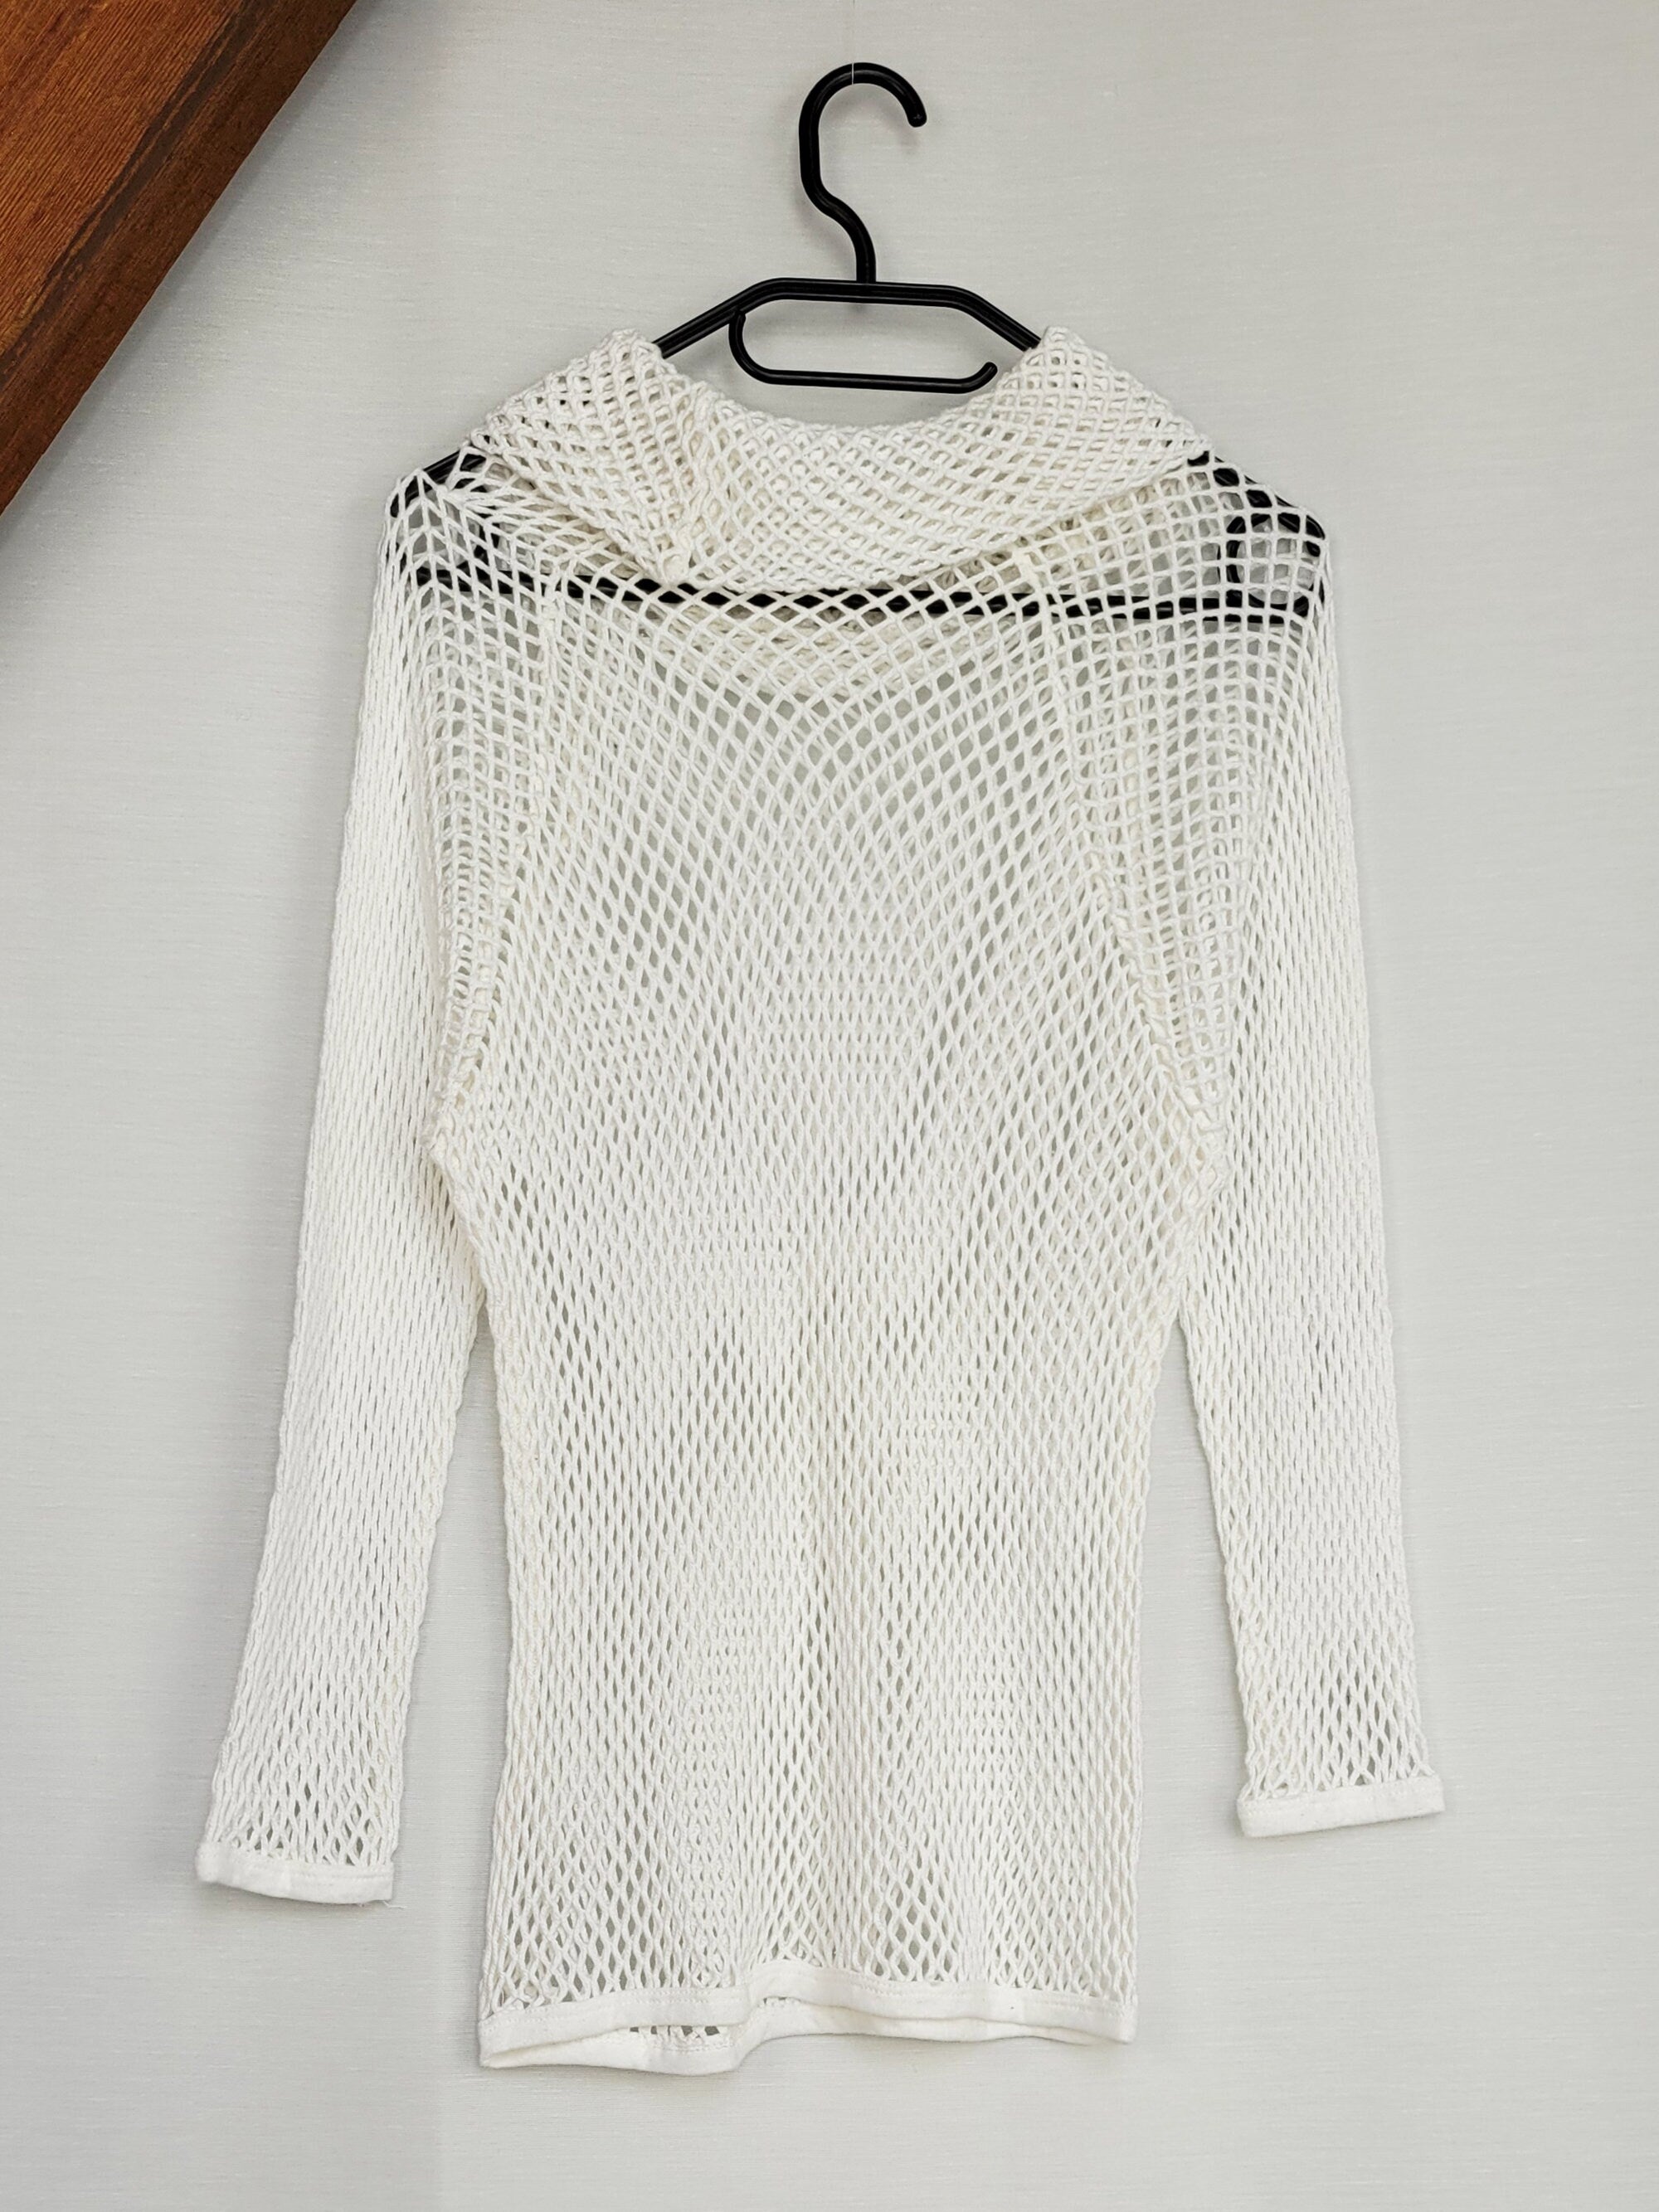 Vintage 90s white sheer net knit roll neck jumper top